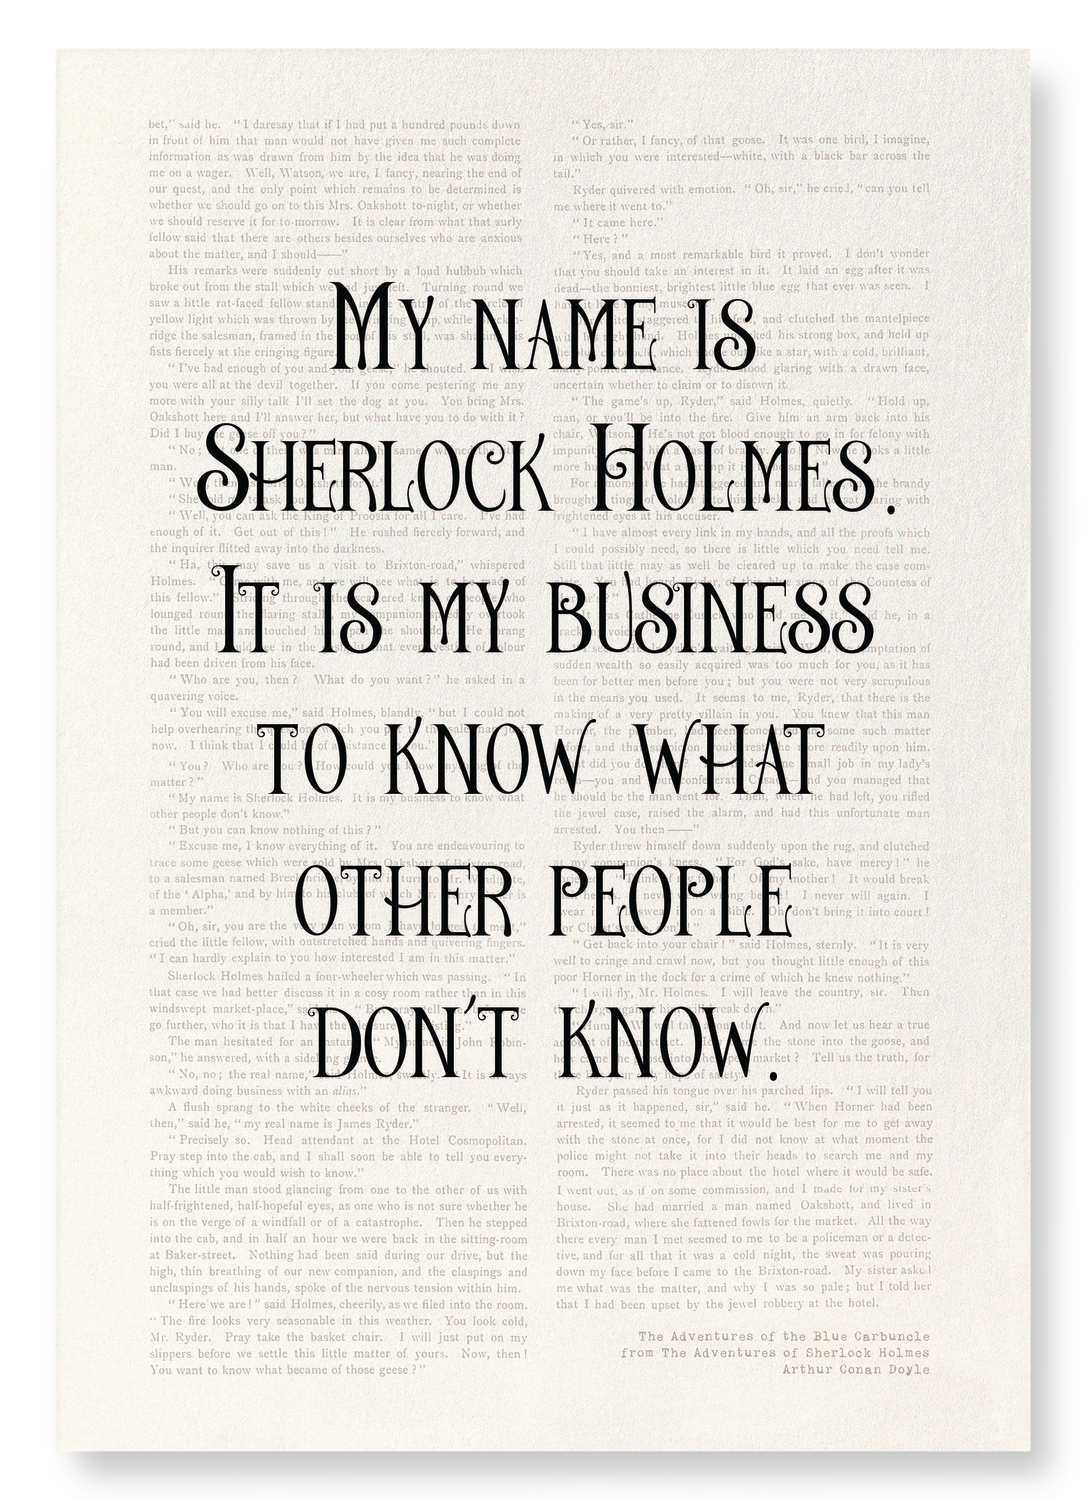 MY NAME IS SHERLOCK HOLMES (1892)